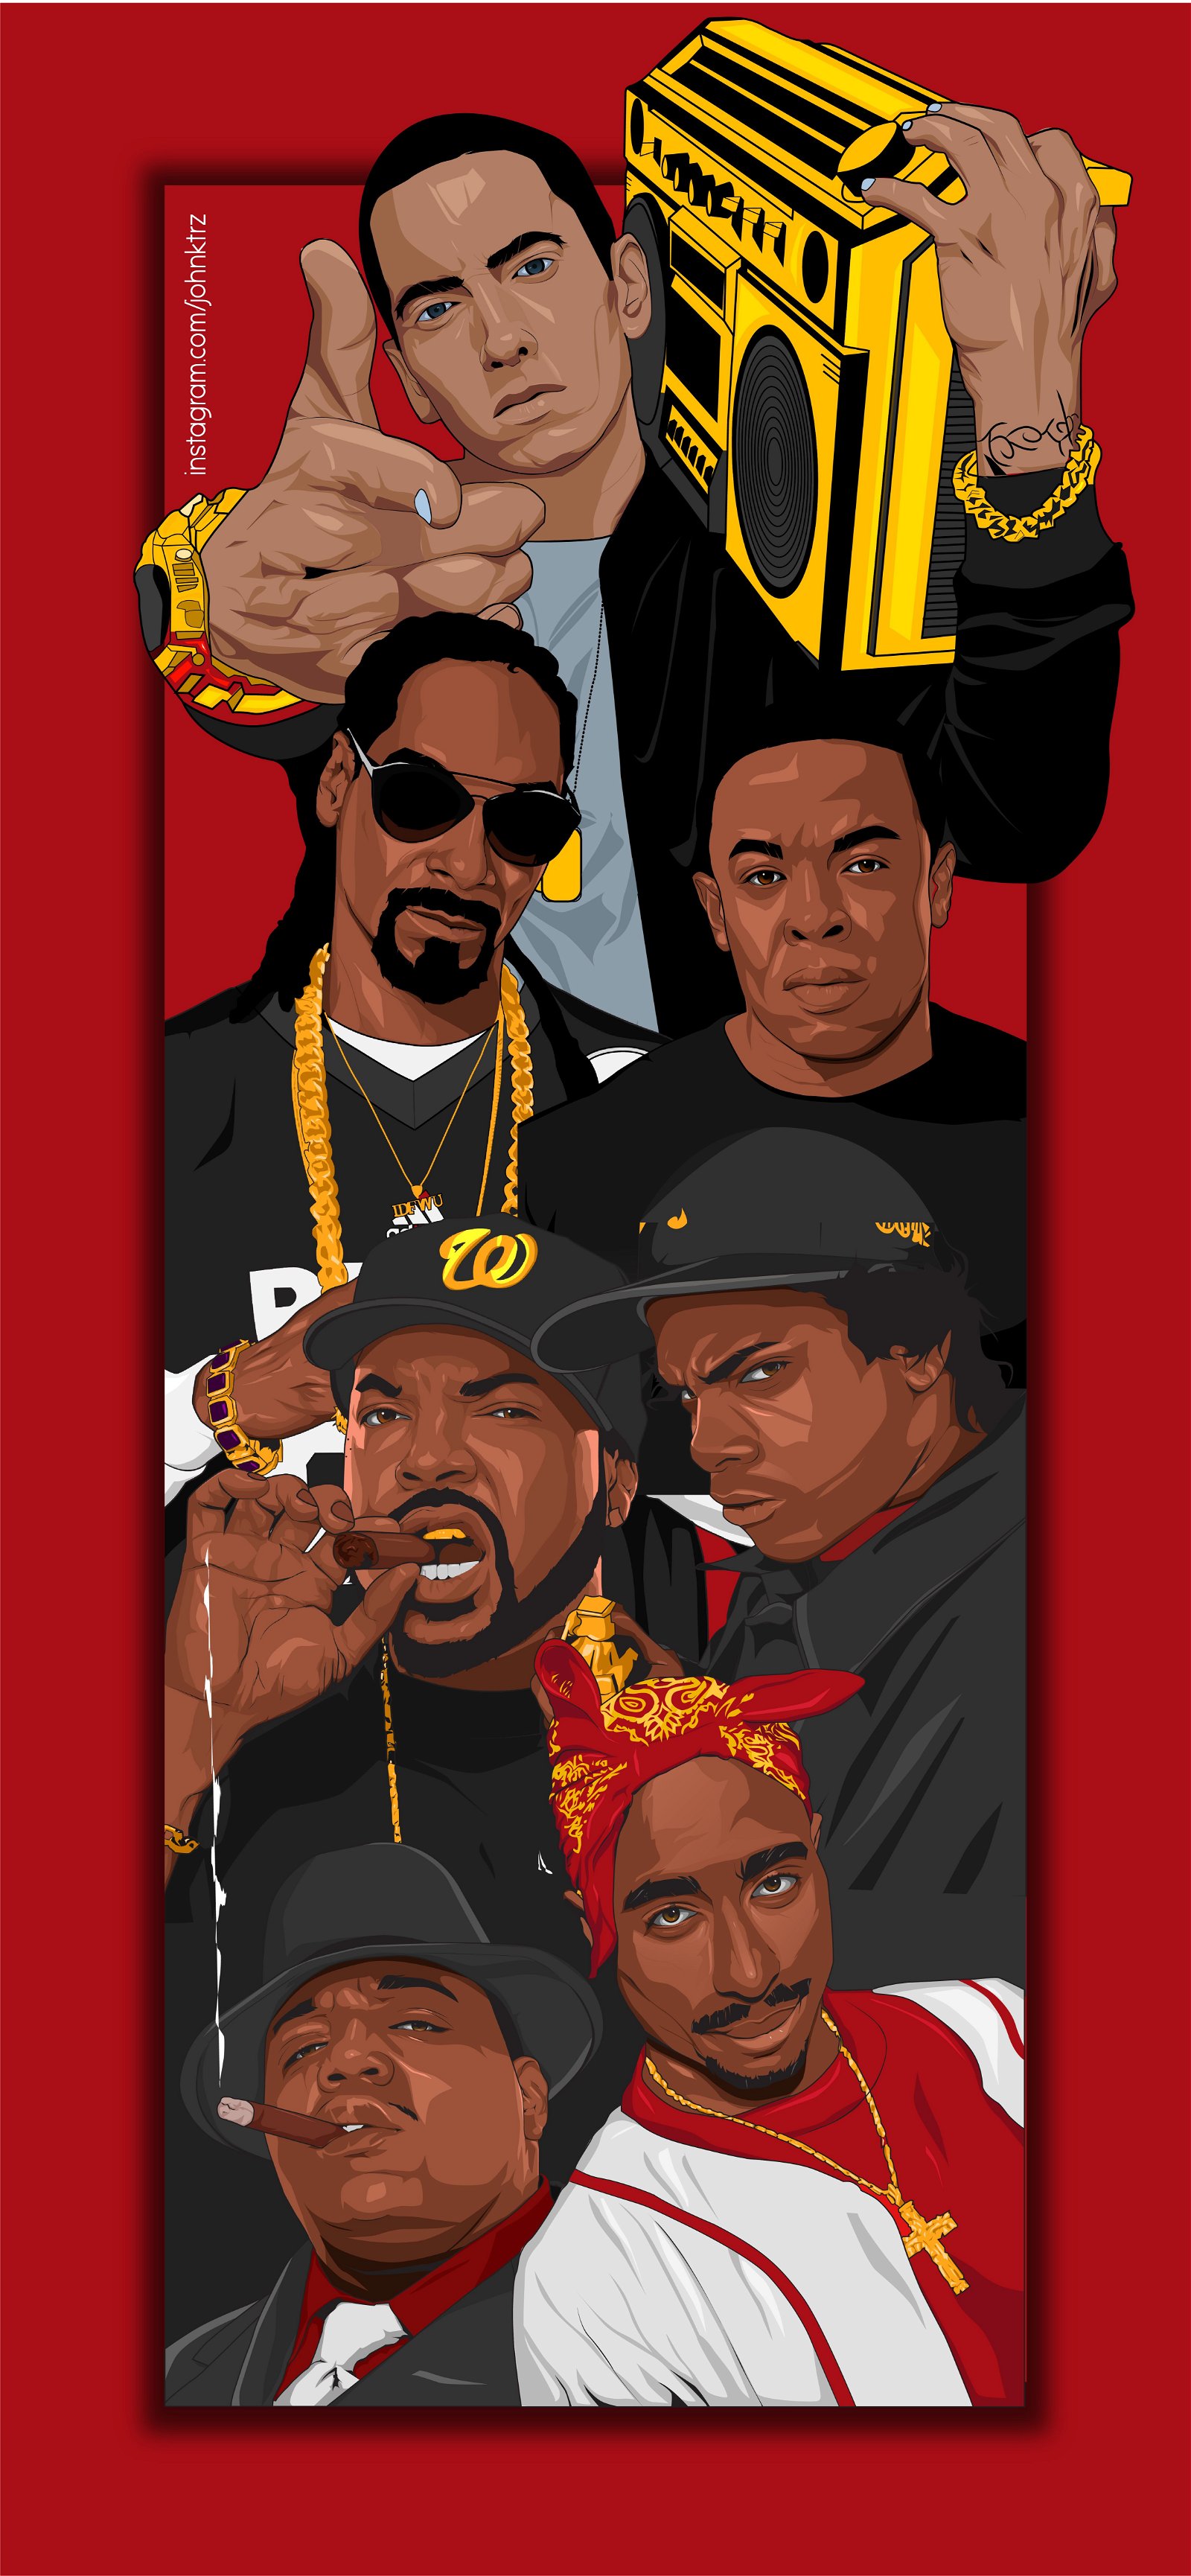 hip hop legends wallpaper